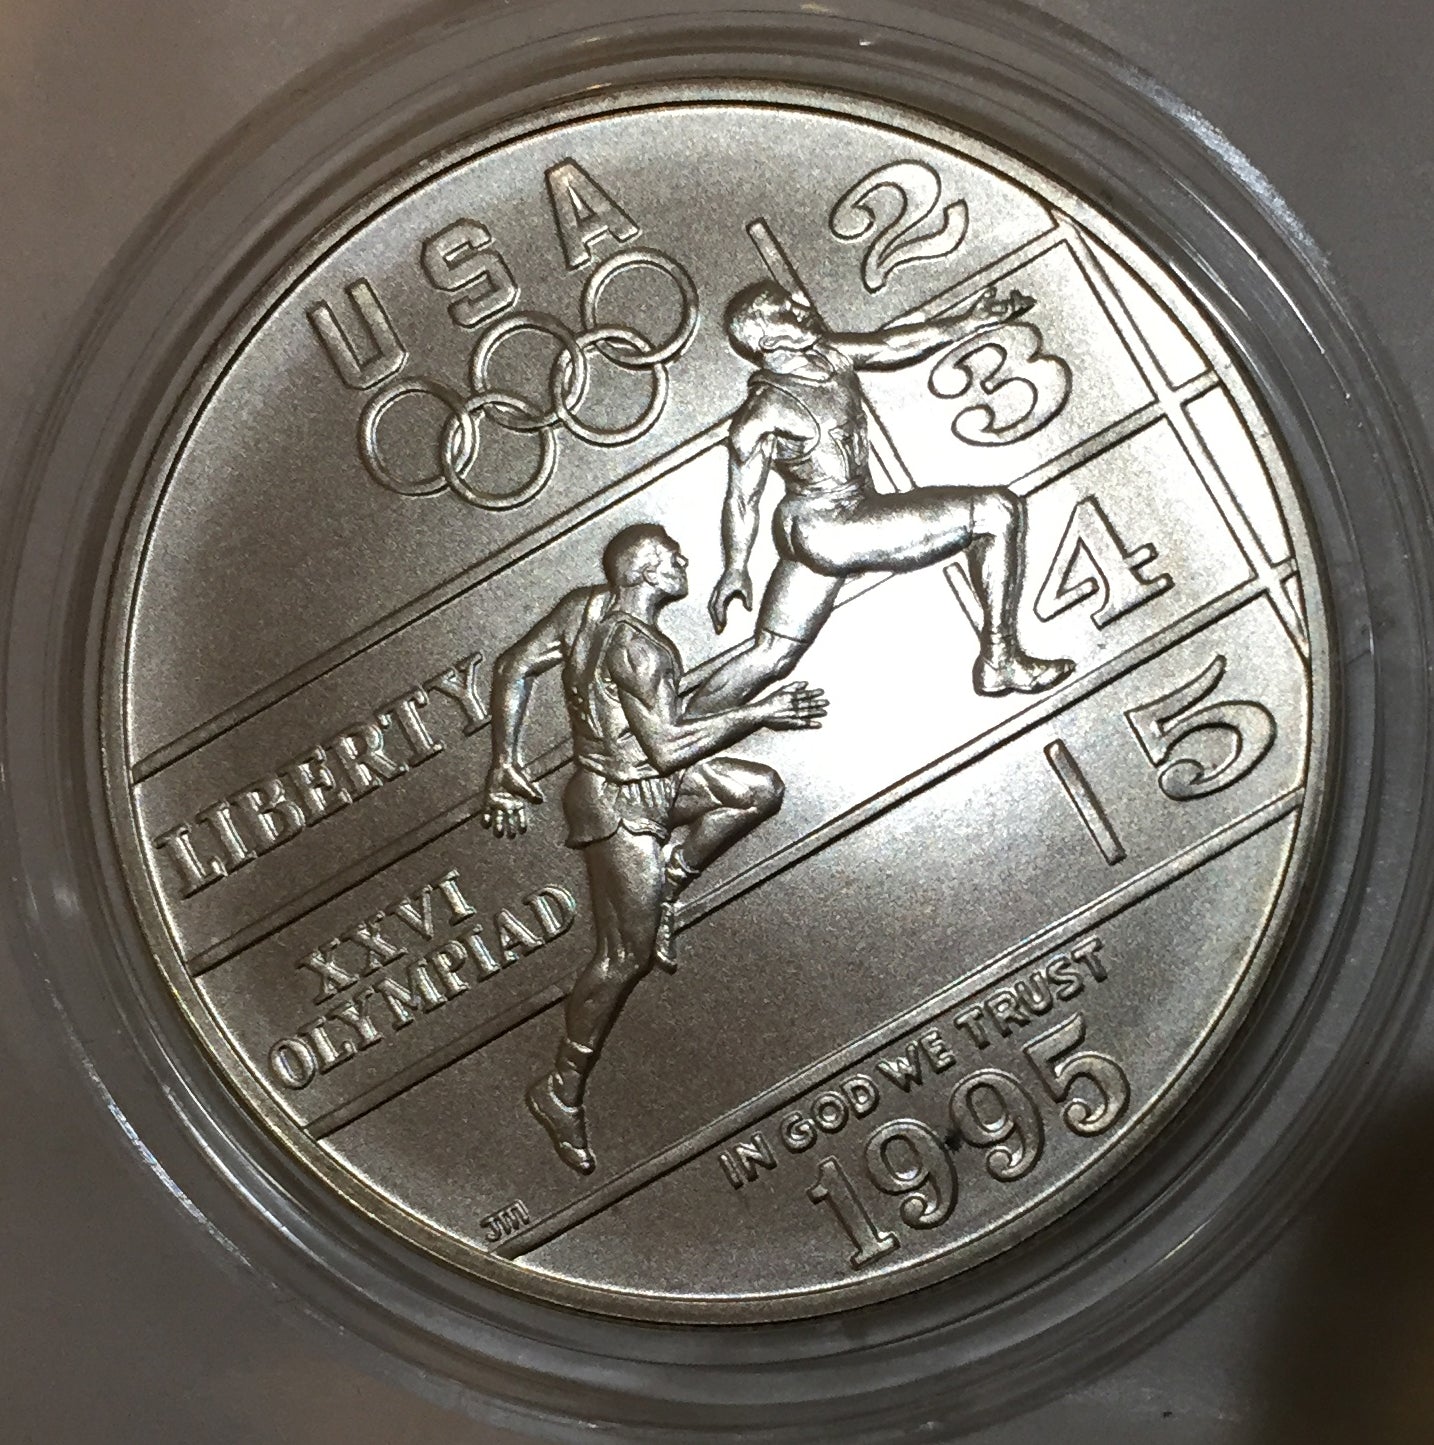 Atlantic Olympic Runners Commemorative Silver Dollar 1995 D GEM UNCIRC uncirculated Denver